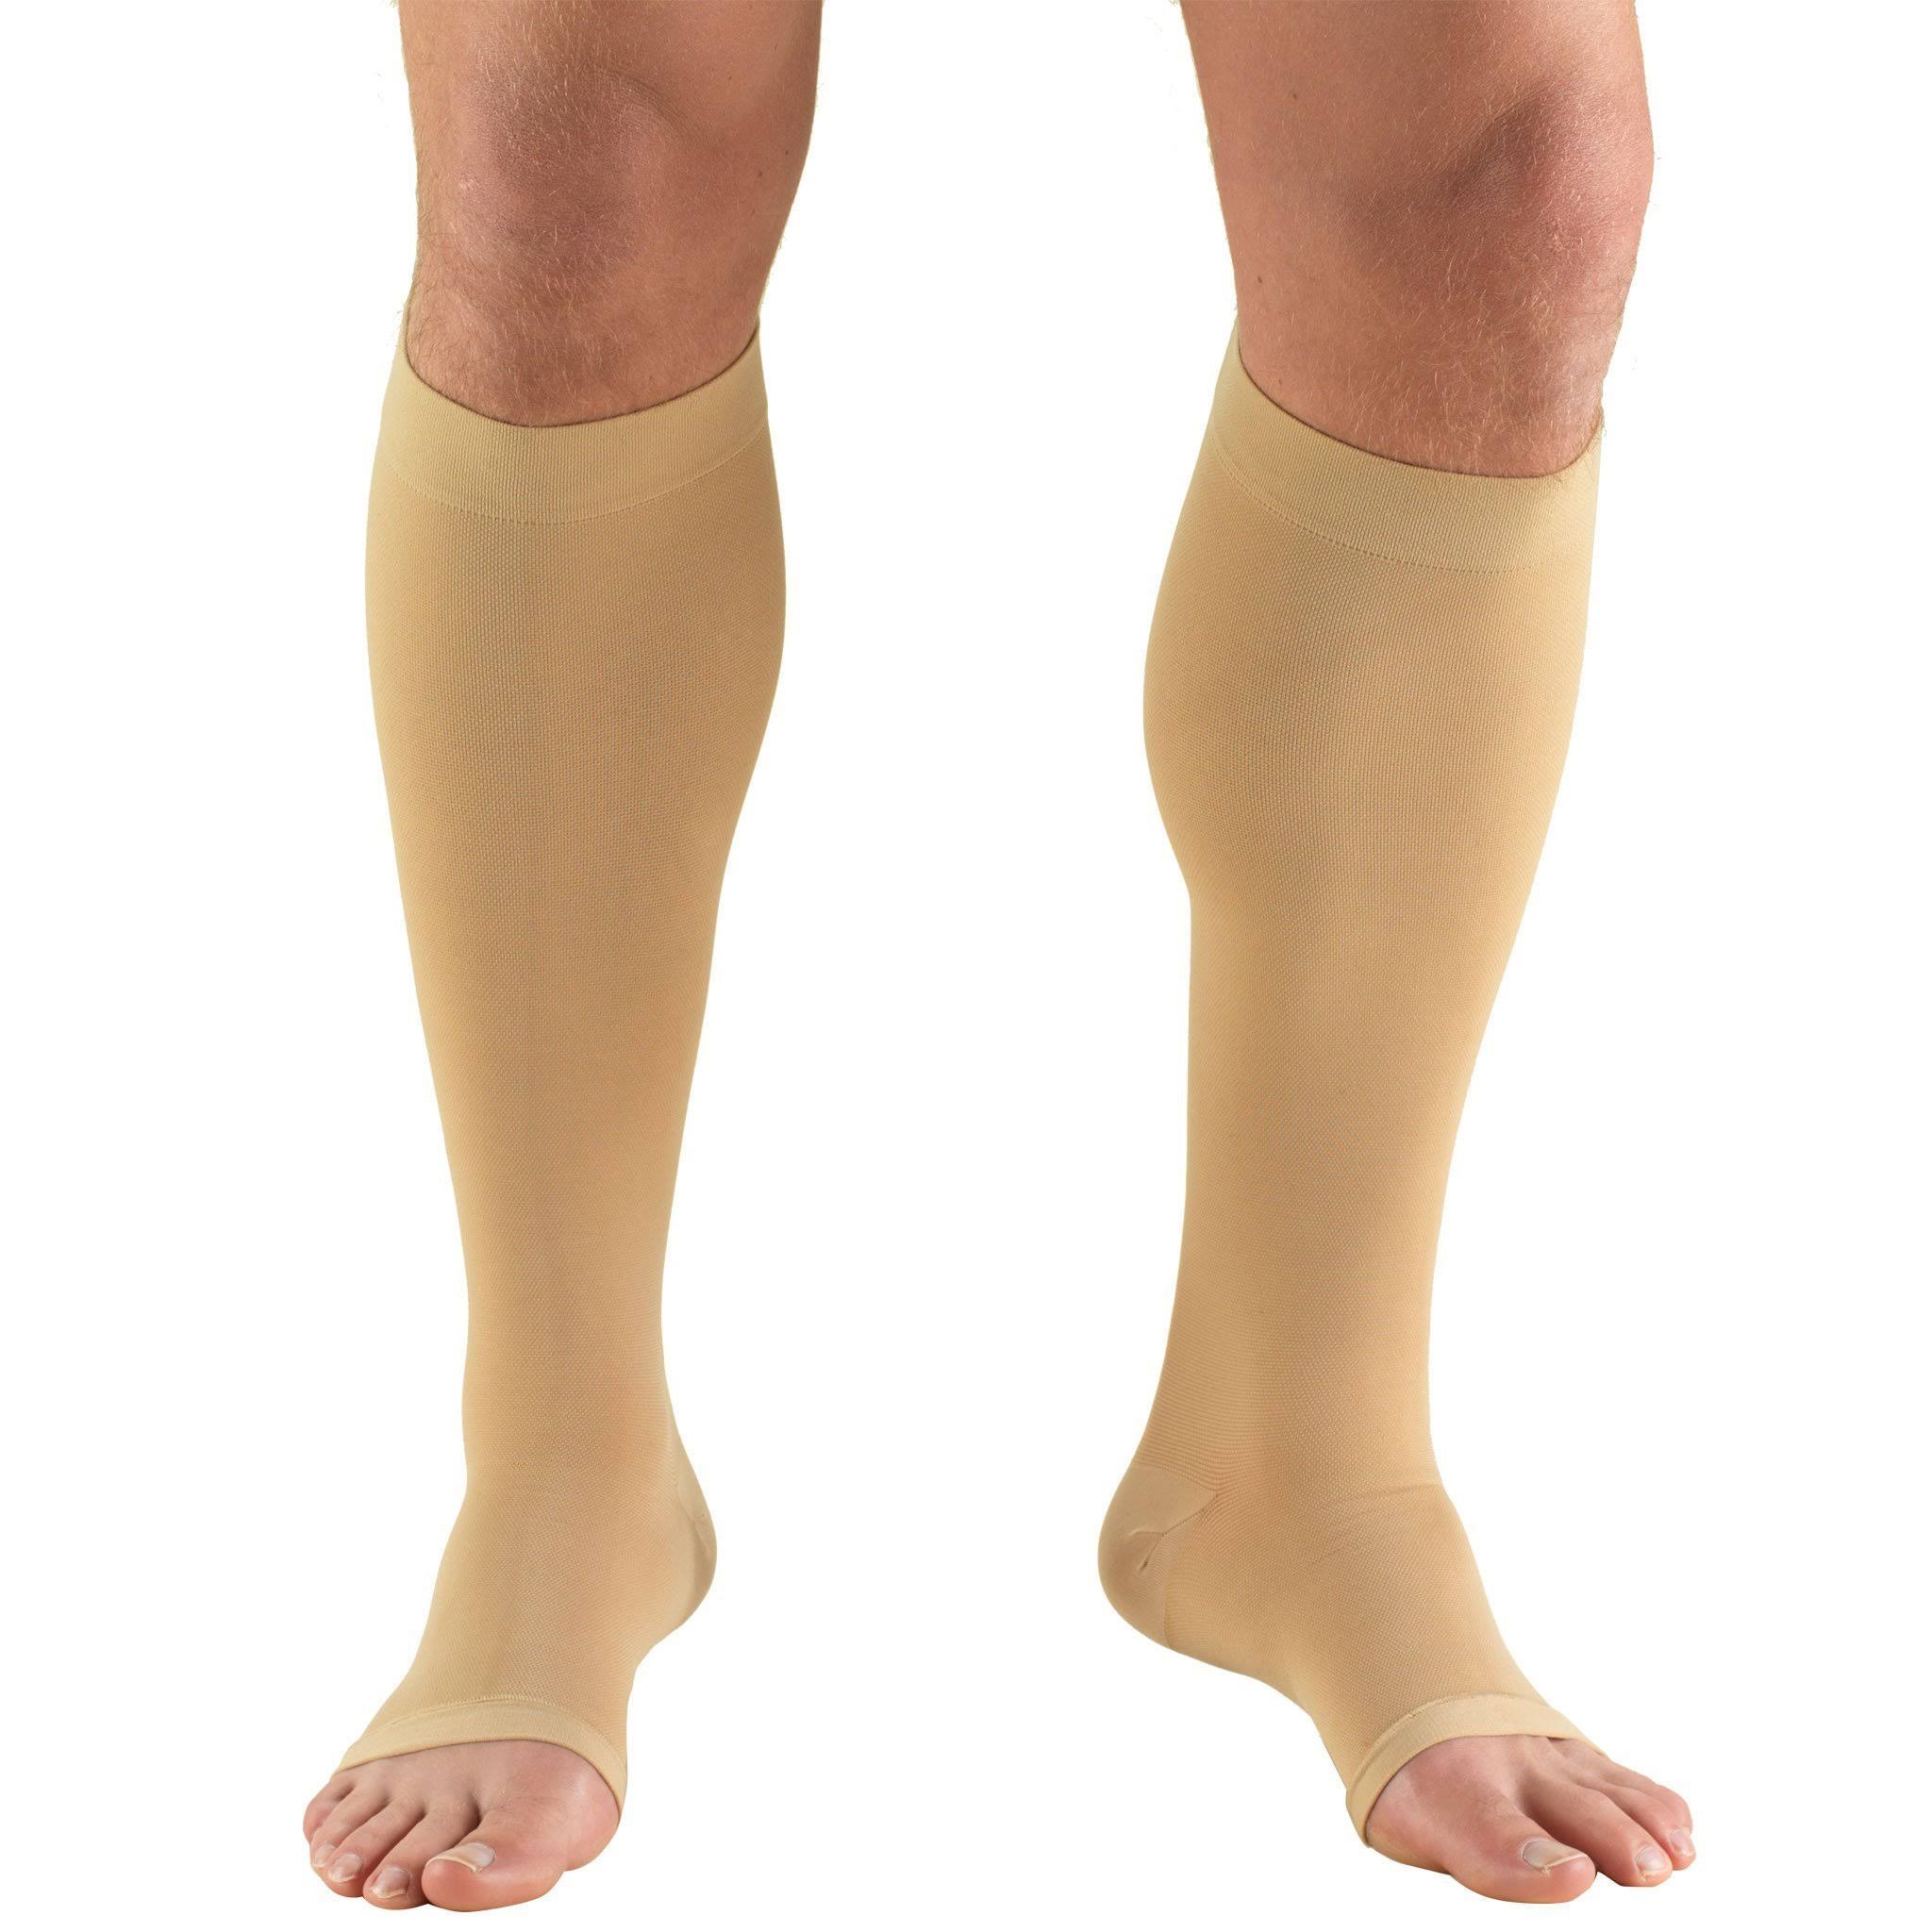 Truform Knee High Open Toe Stockings - 15-20mmhg, Beige, Medium